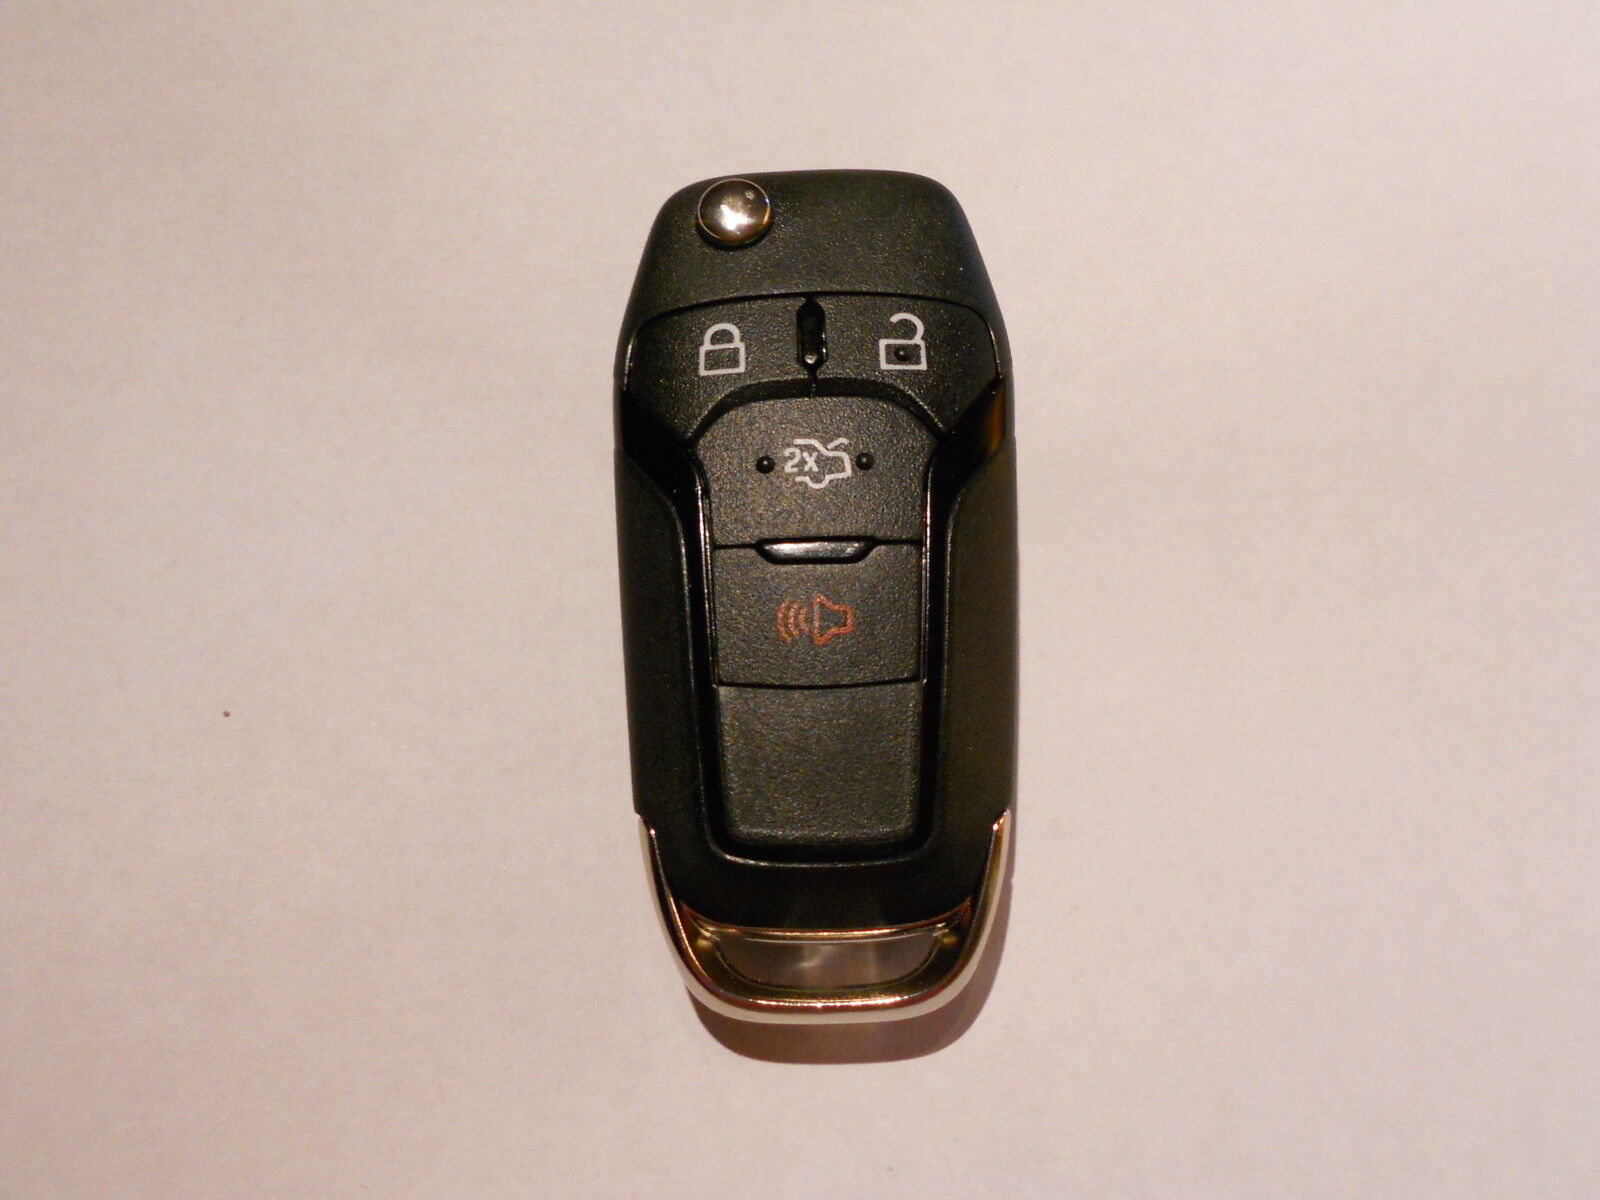 NEW , 2013 Ford Fusion Remote Entry Fob, Cut Flip Key Blade, 4- Button